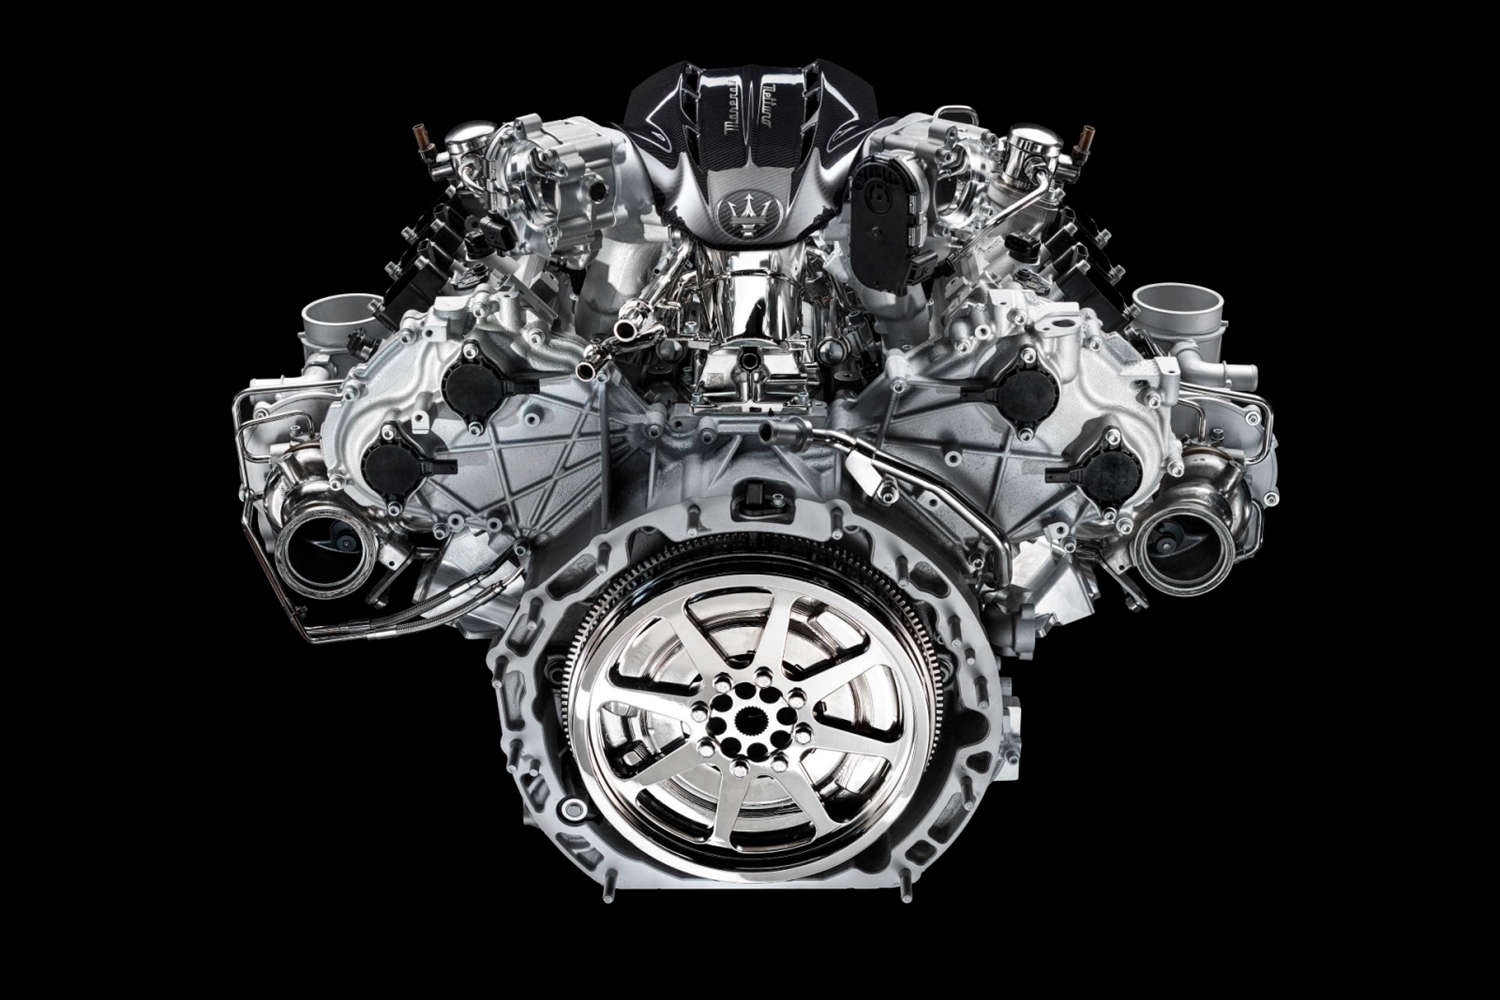 630 lóerős a Maserati új V6-os turbómotorja 6